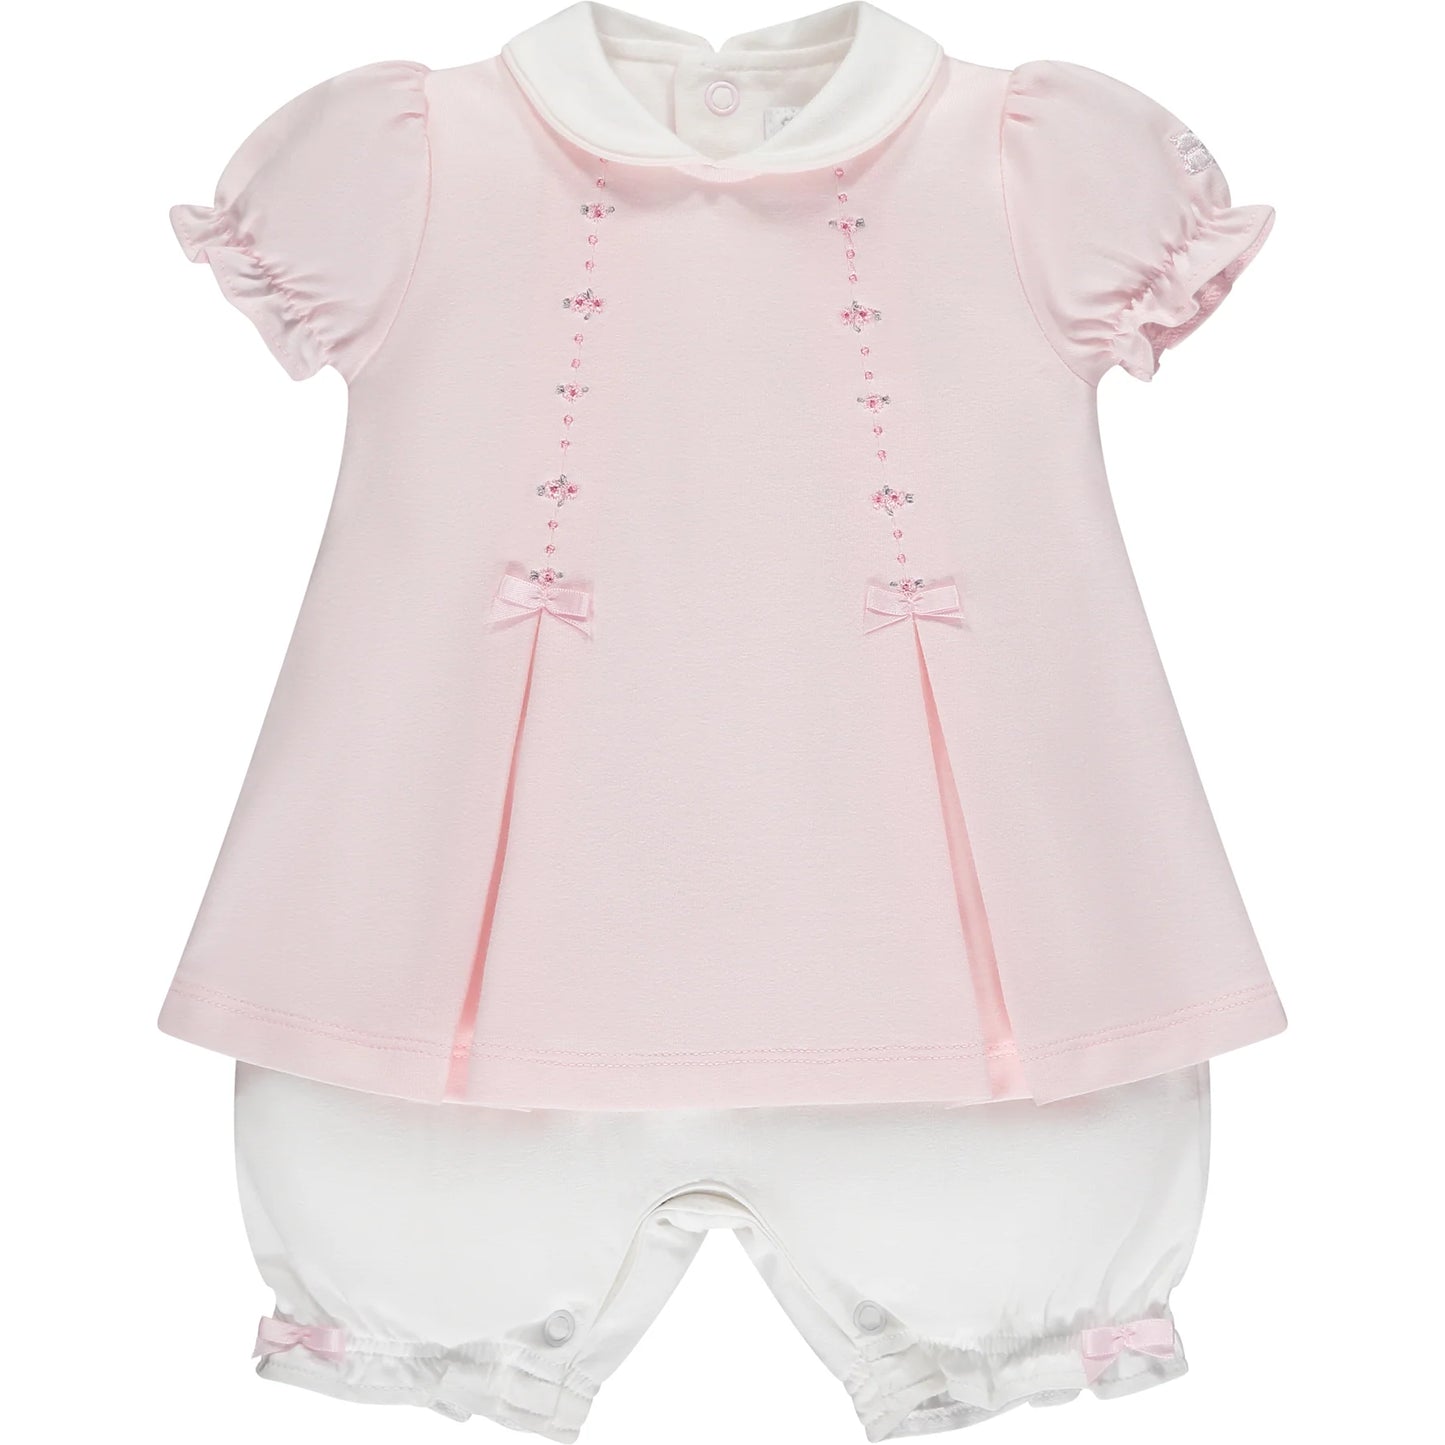 Emile et Rose Baby Girl's Pale Pink 2-in-1 Romper Dress